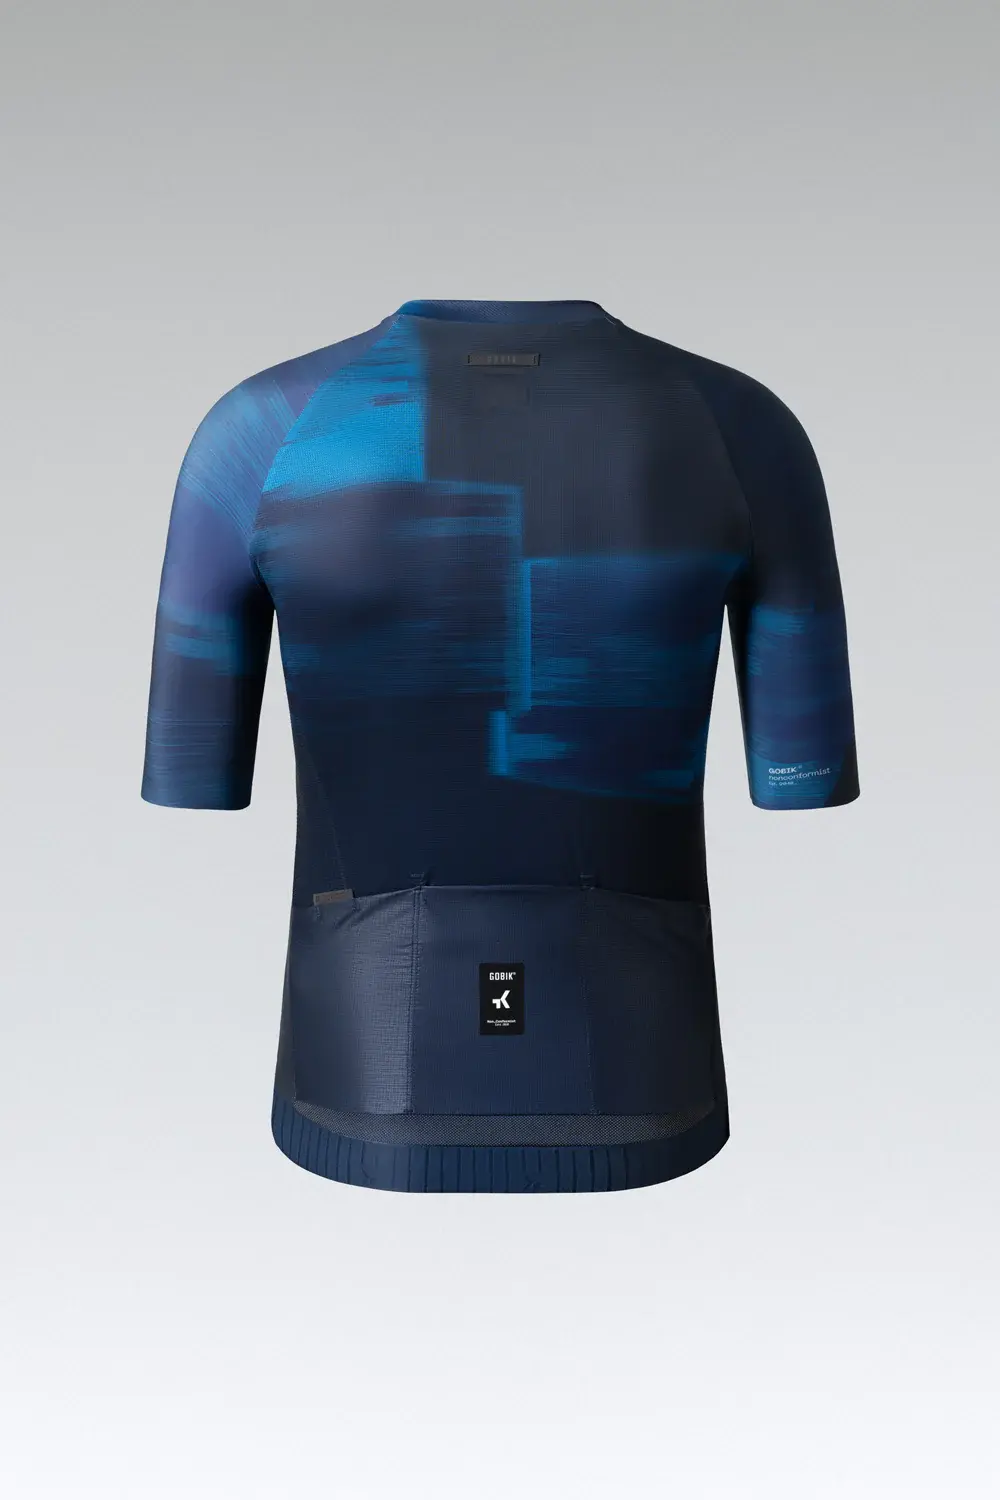 Gobik CX 3.0 Pro Fietsshirt Korte Mouwen Blauw